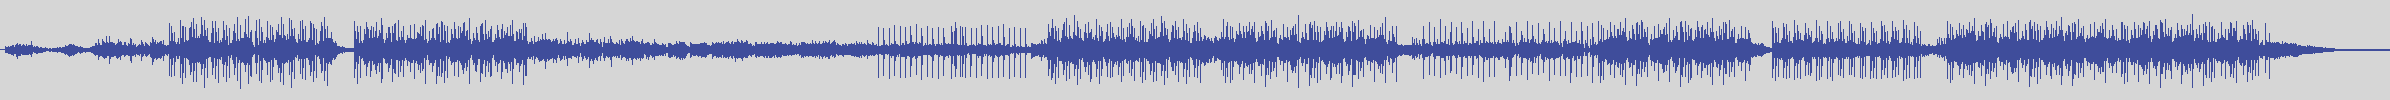 noclouds_chillout [NOC080] Loungetrax - Spektralis [Original Mix] audio wave form